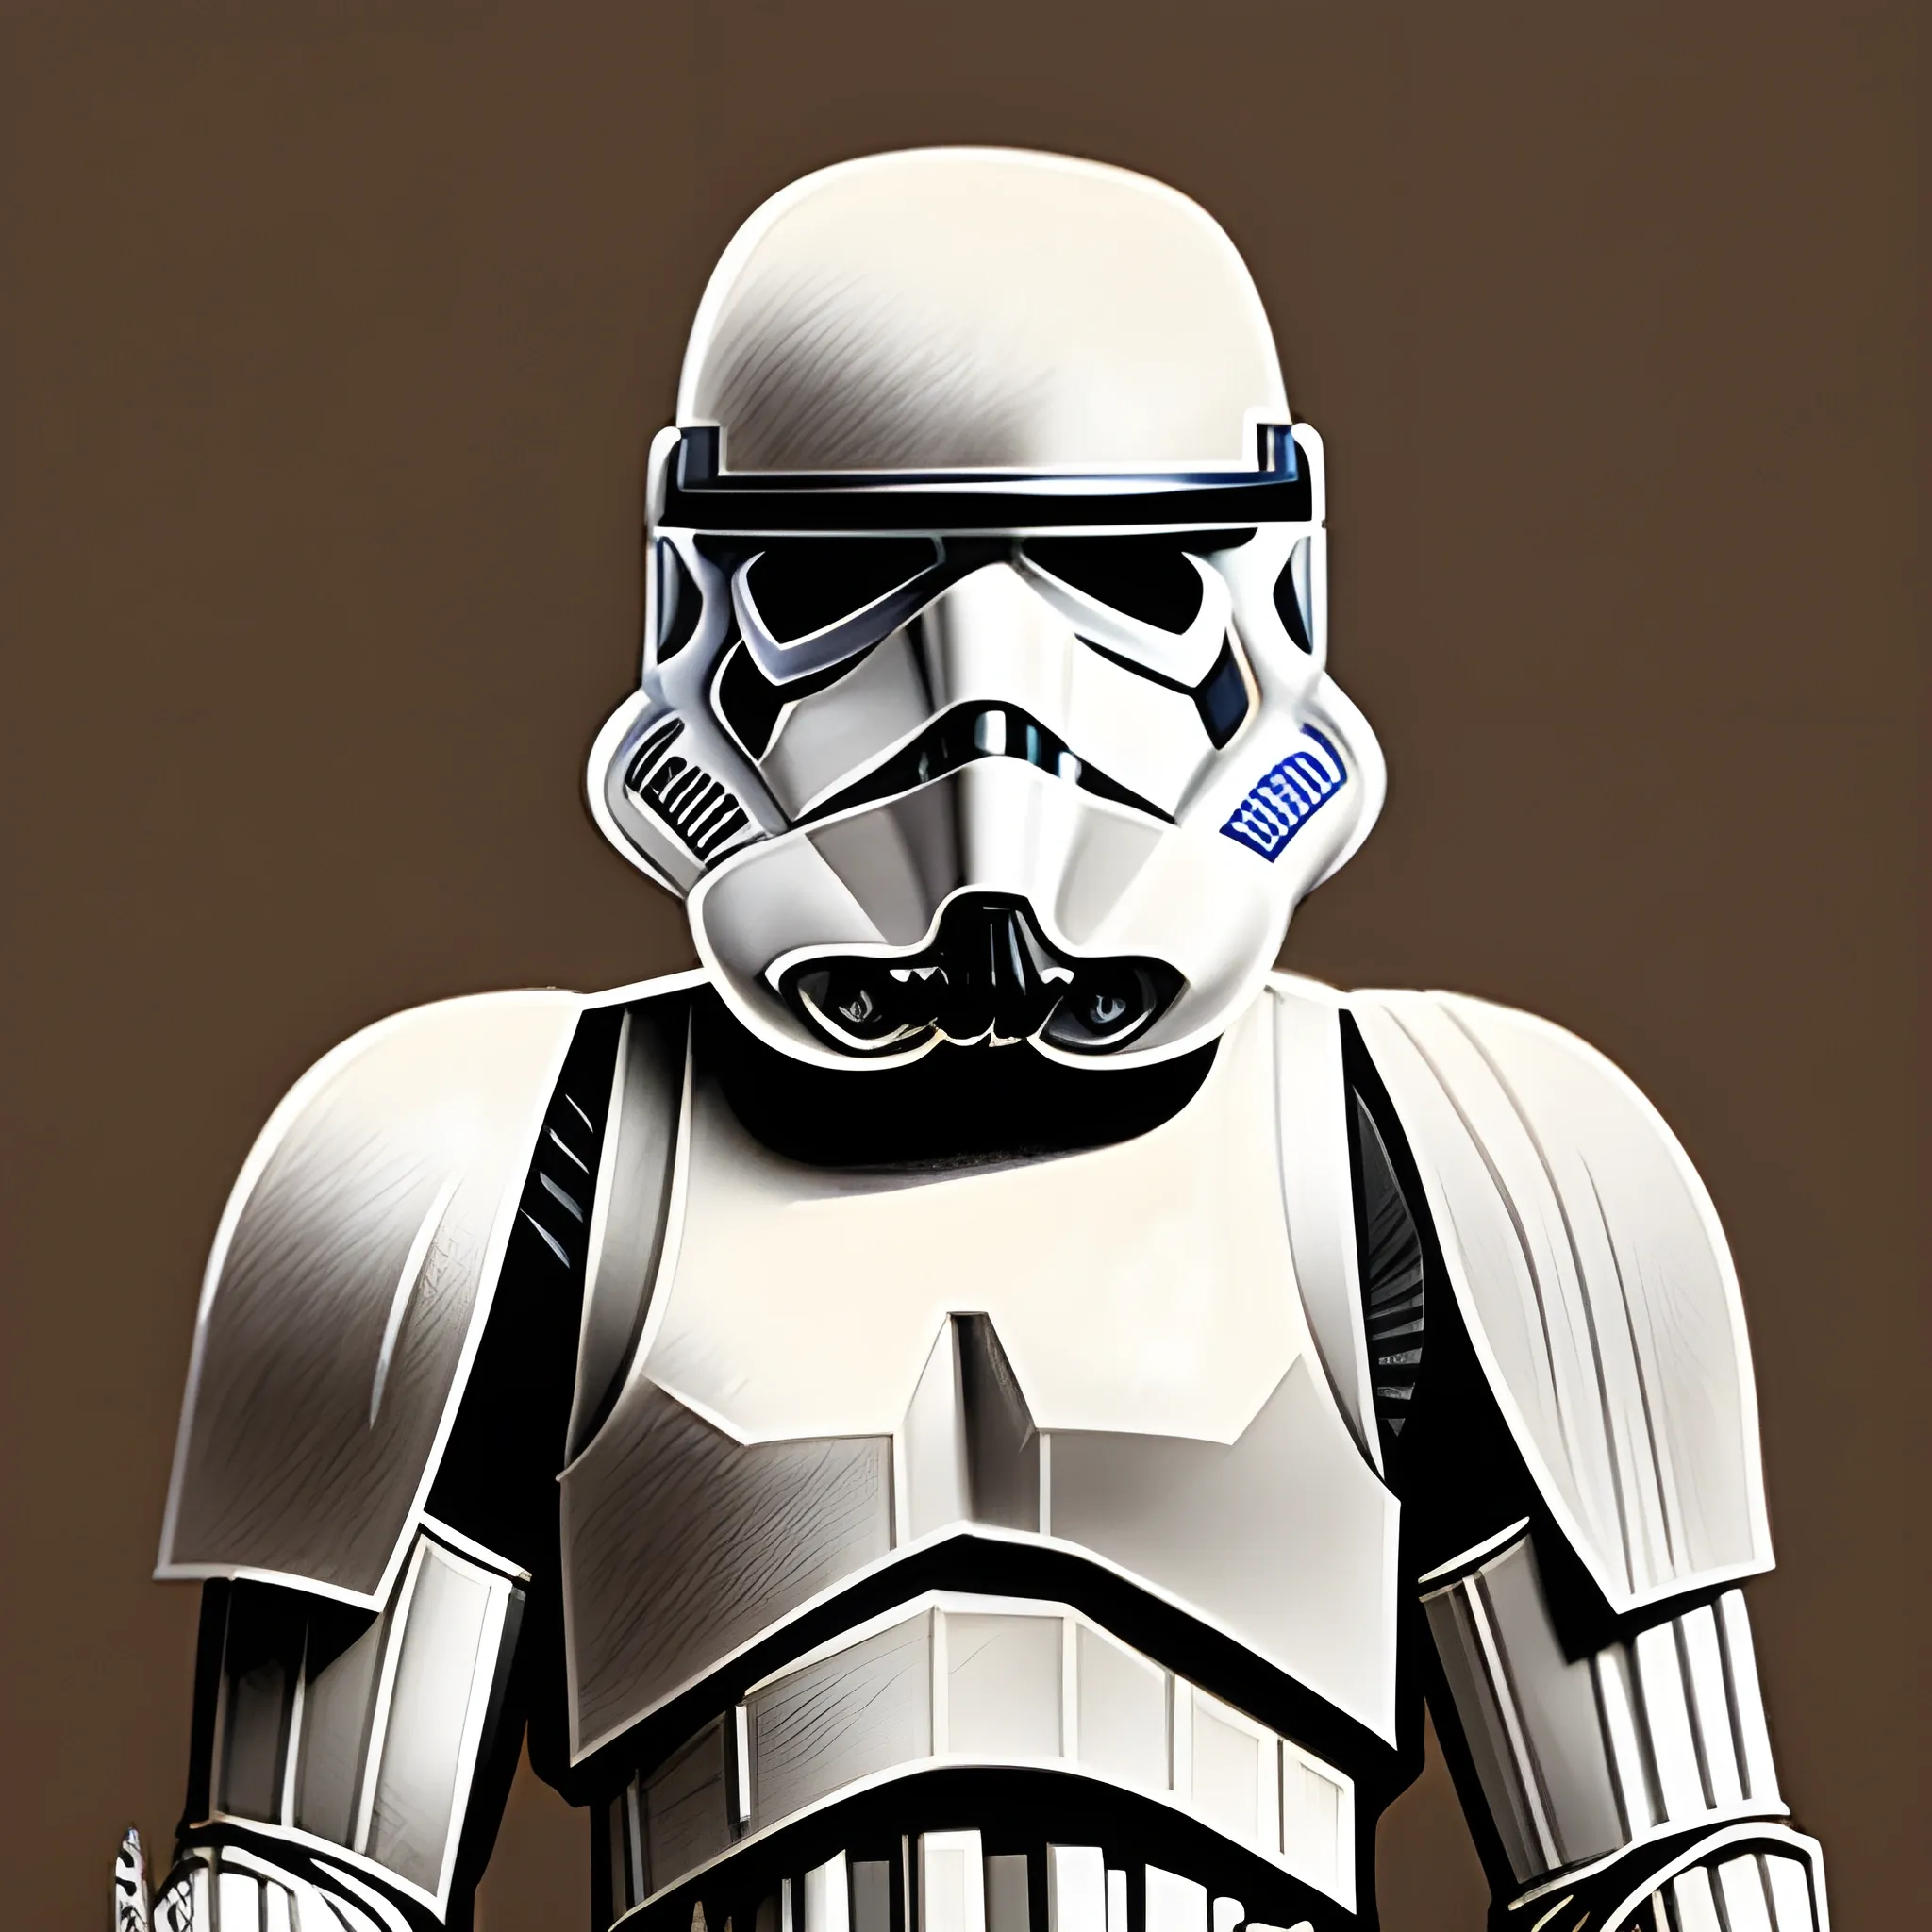 Star Wars Star Trooper as a bodybuilder, Pencil Sketch